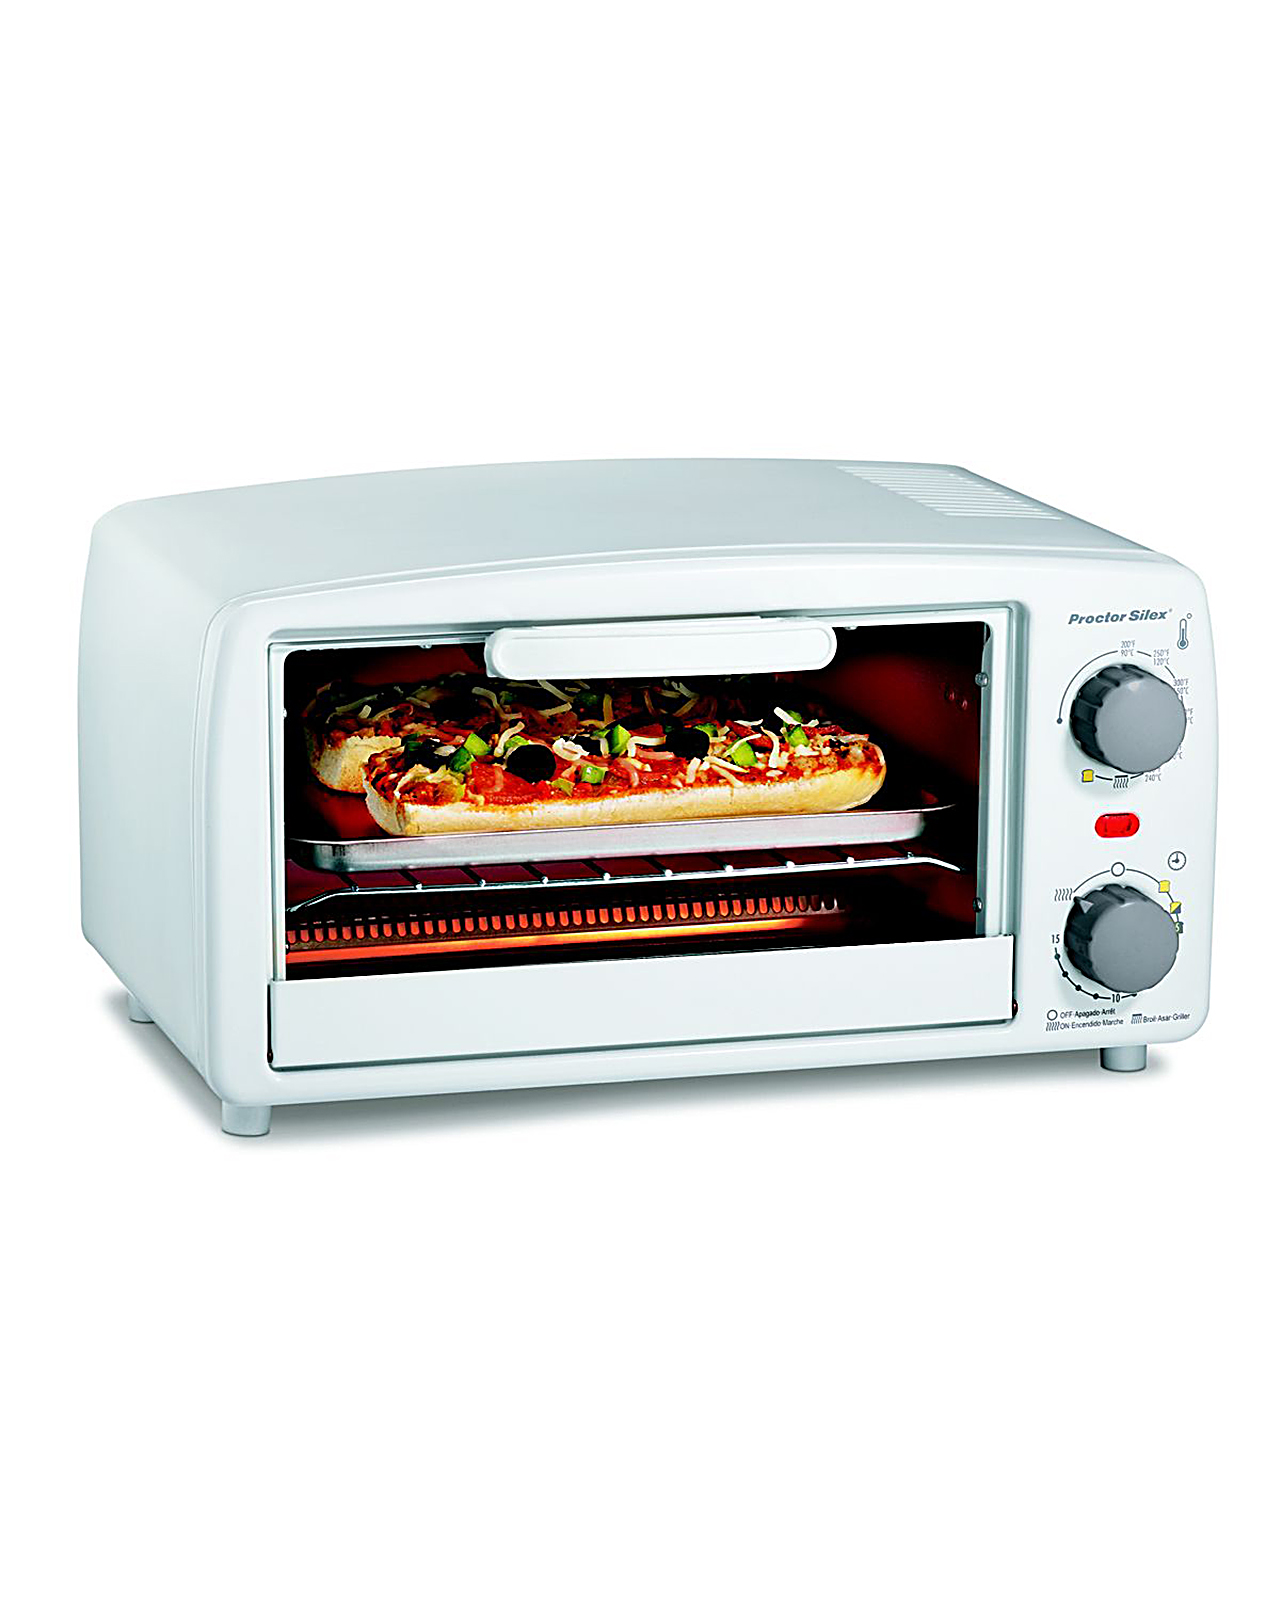 Proctor Silex Large 4 Slice Toaster Oven Broiler - 31116R